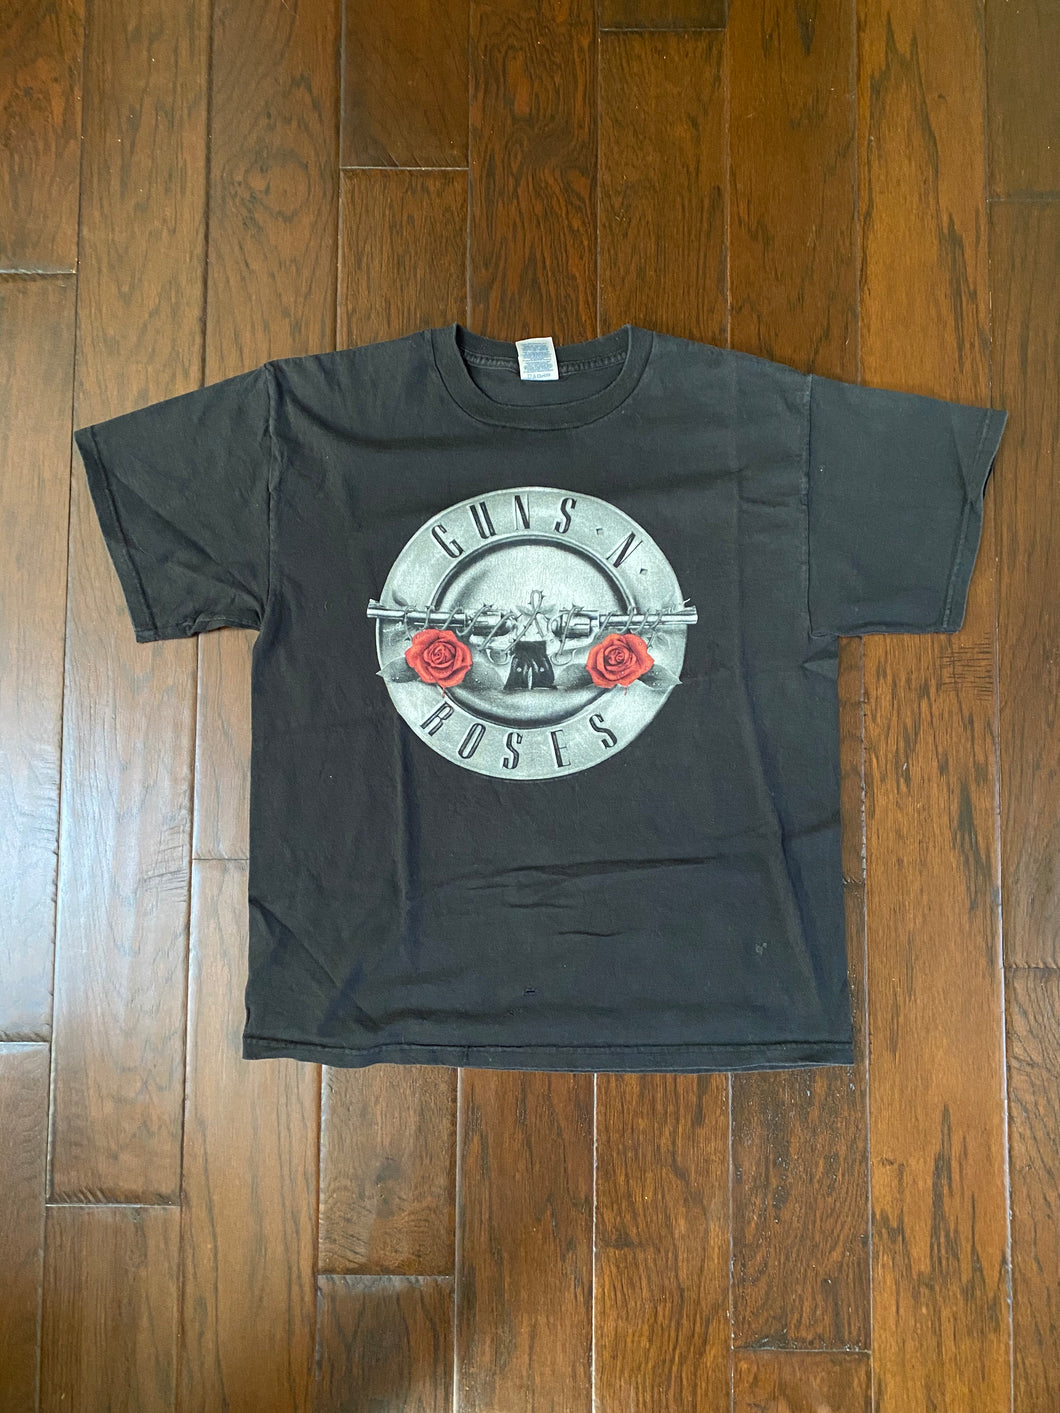 Guns N’ Roses 2007 Vintage Distressed T-shirt